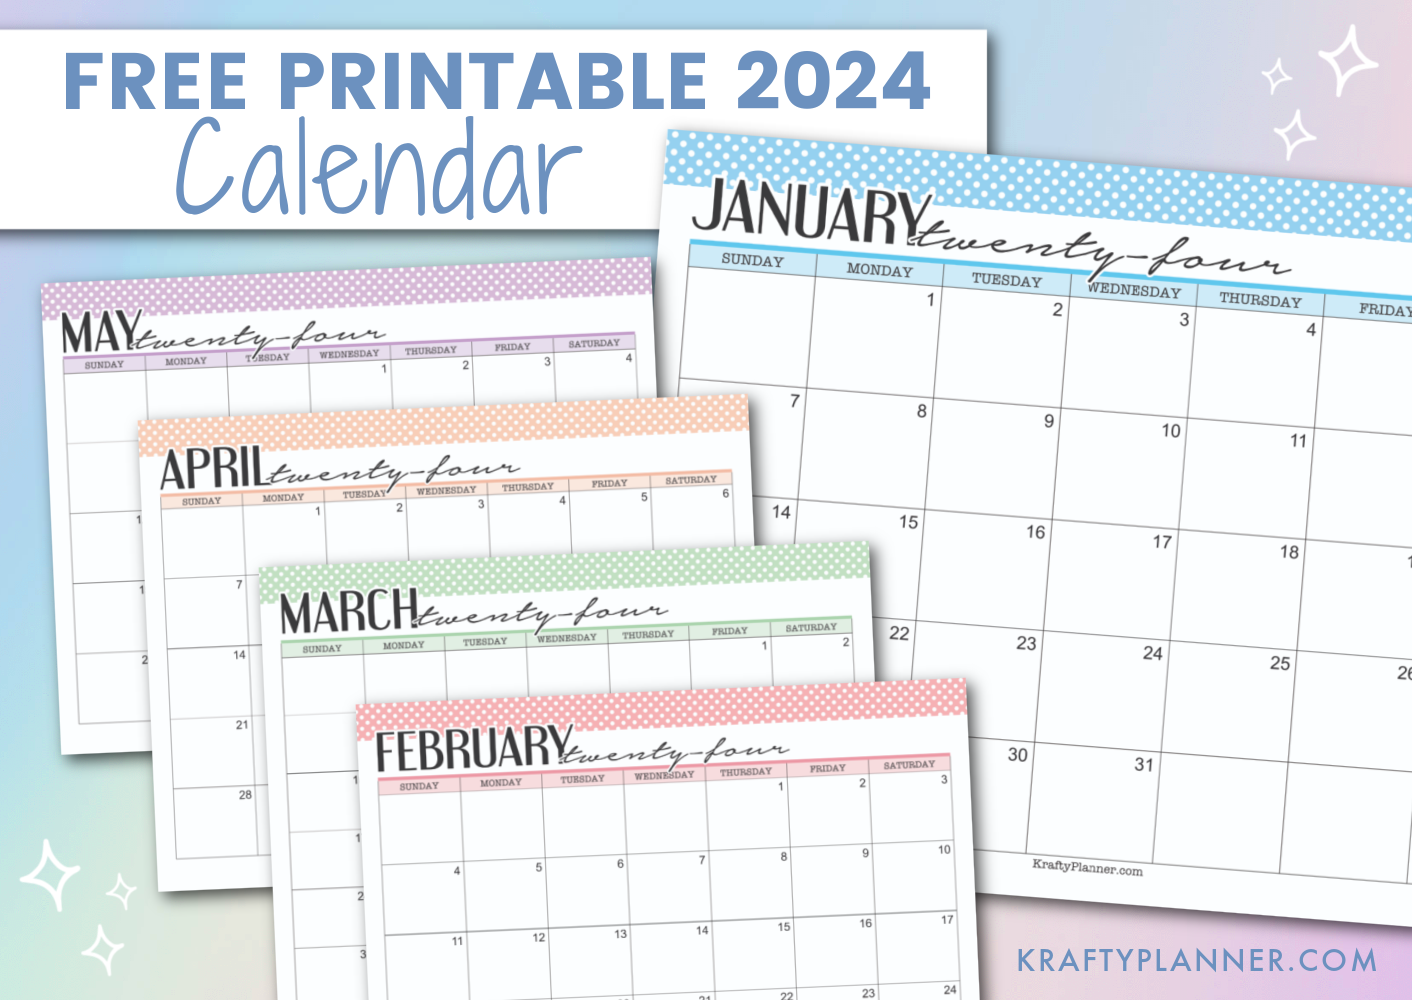 Free Printable 2024 Calendars (Color) — Krafty Planner for 2024 Printable Coloring Calendar